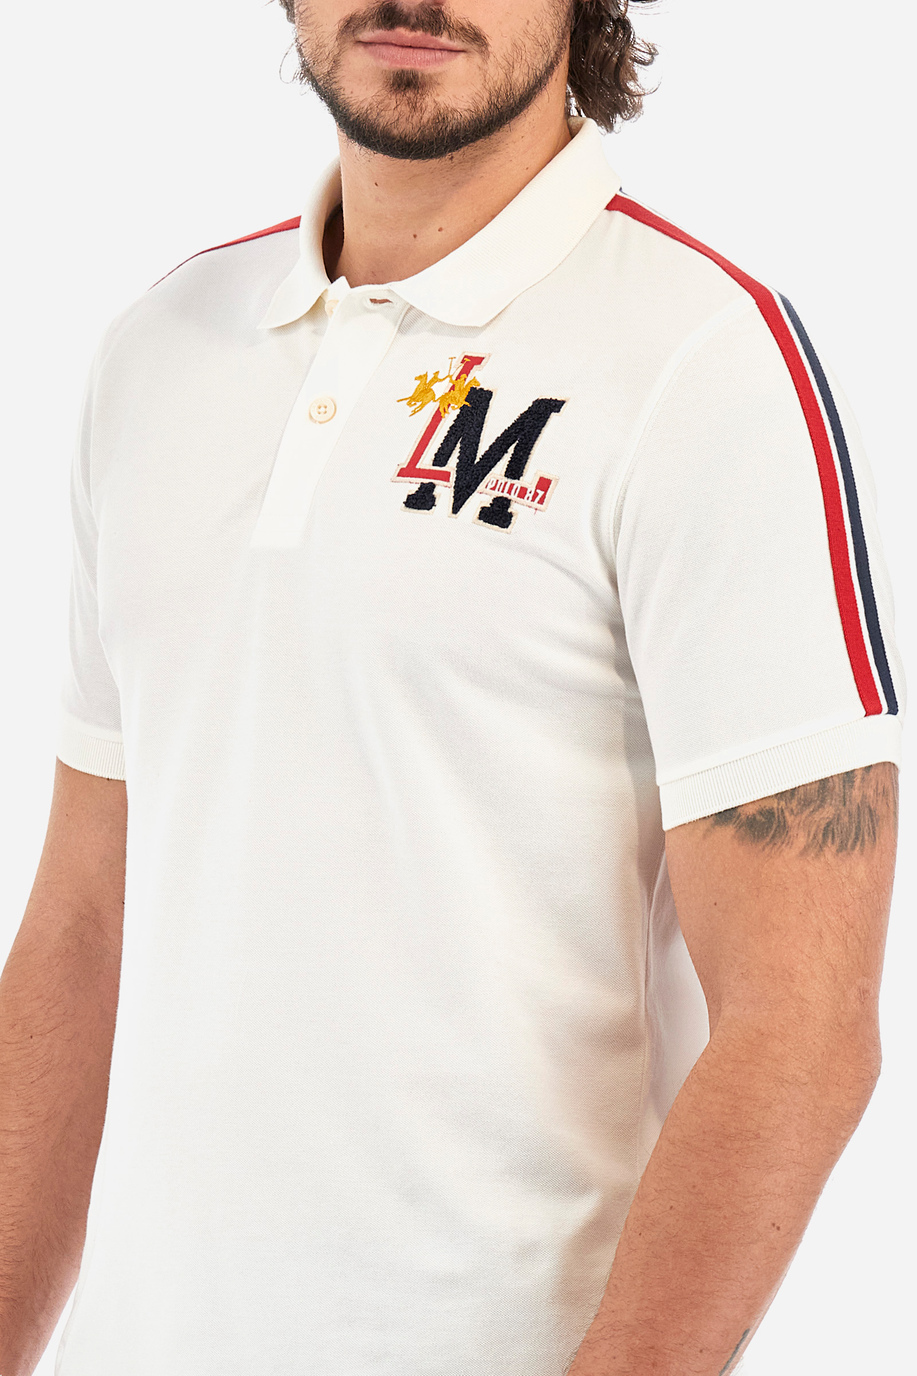 Men's polo shirt in a regular fit - Wai - Short Sleeve | La Martina - Official Online Shop